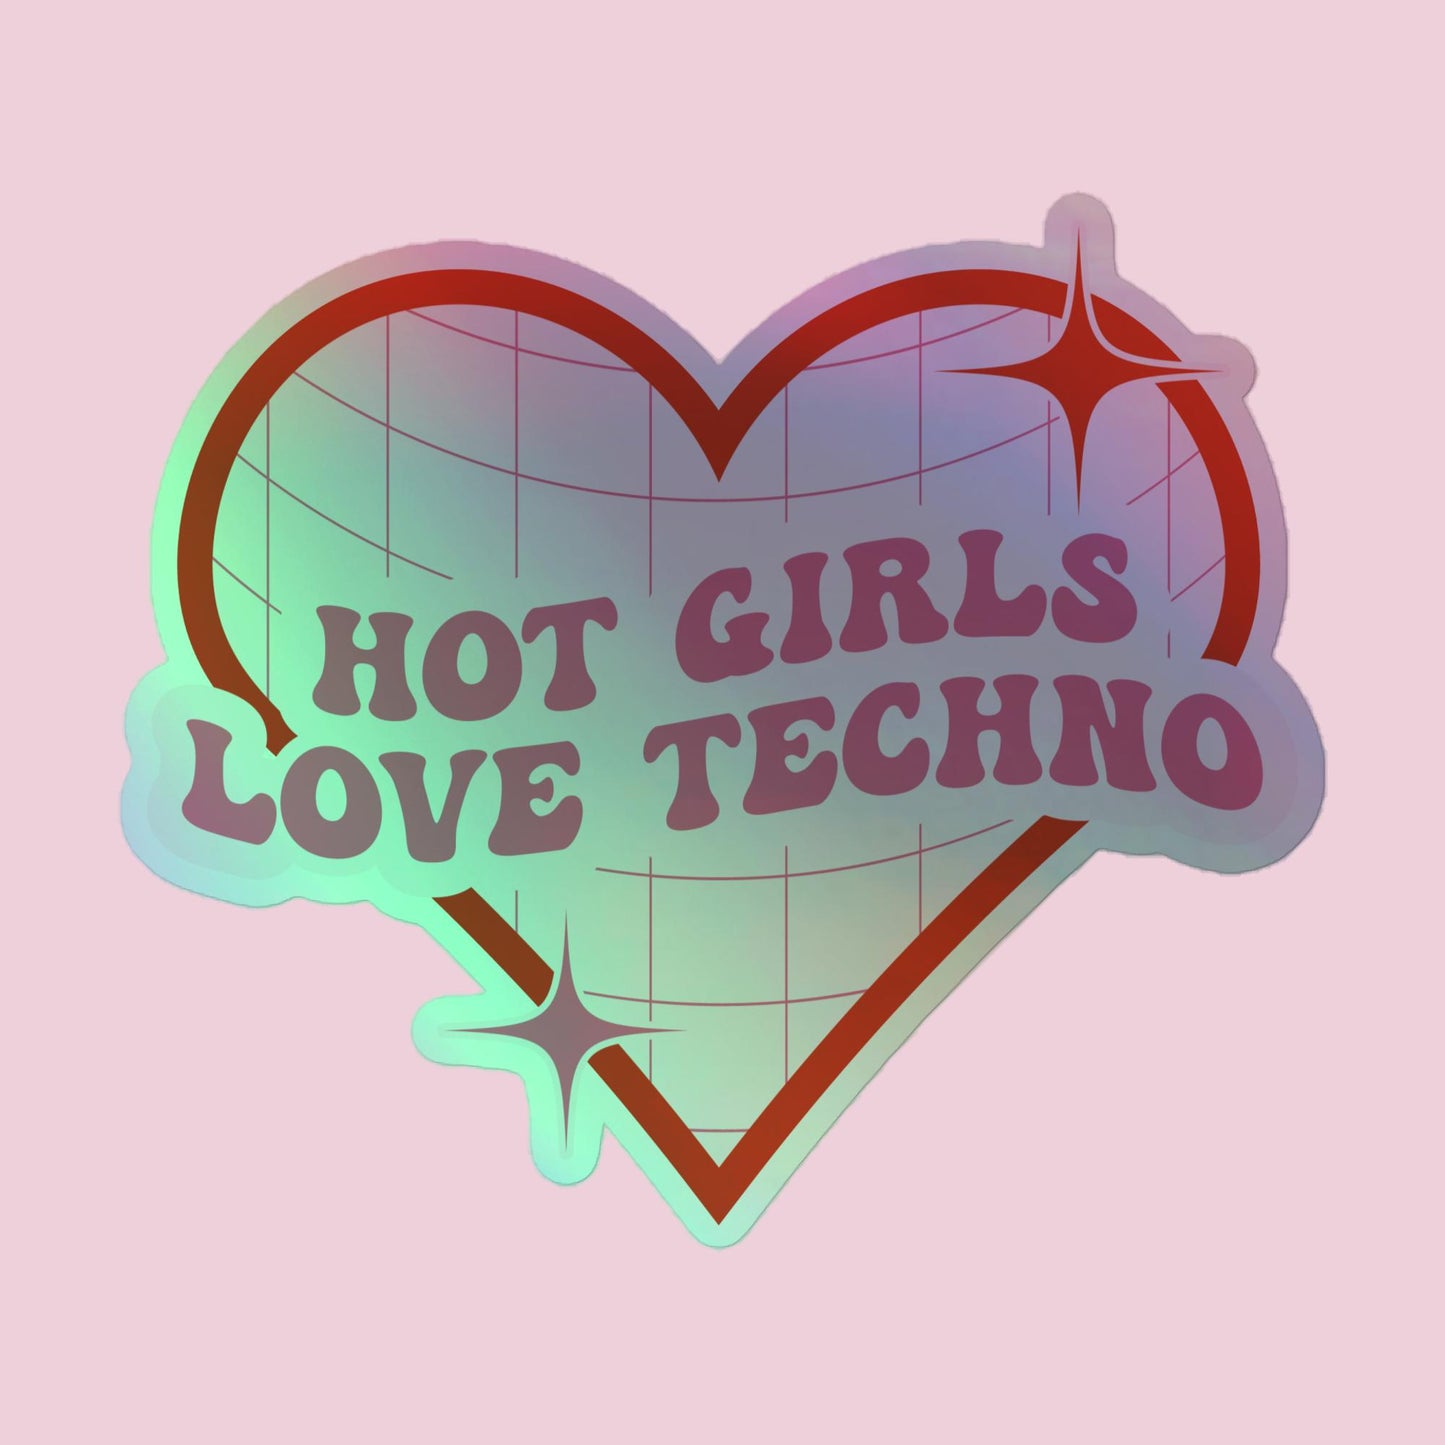 Hot Girls Love Techno Holographic Sticker